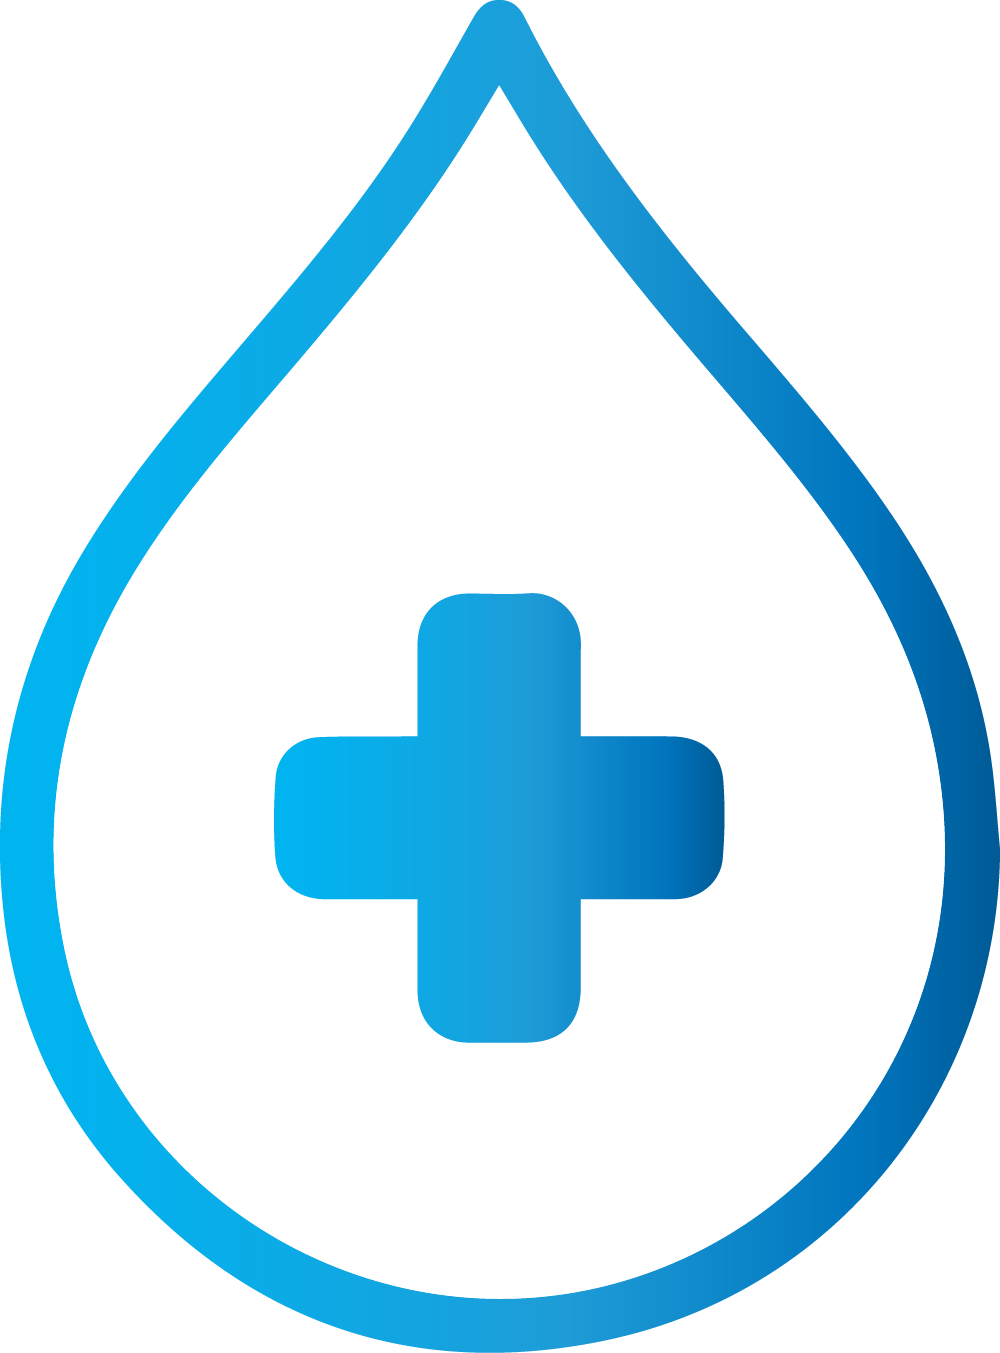 Eco safety logo